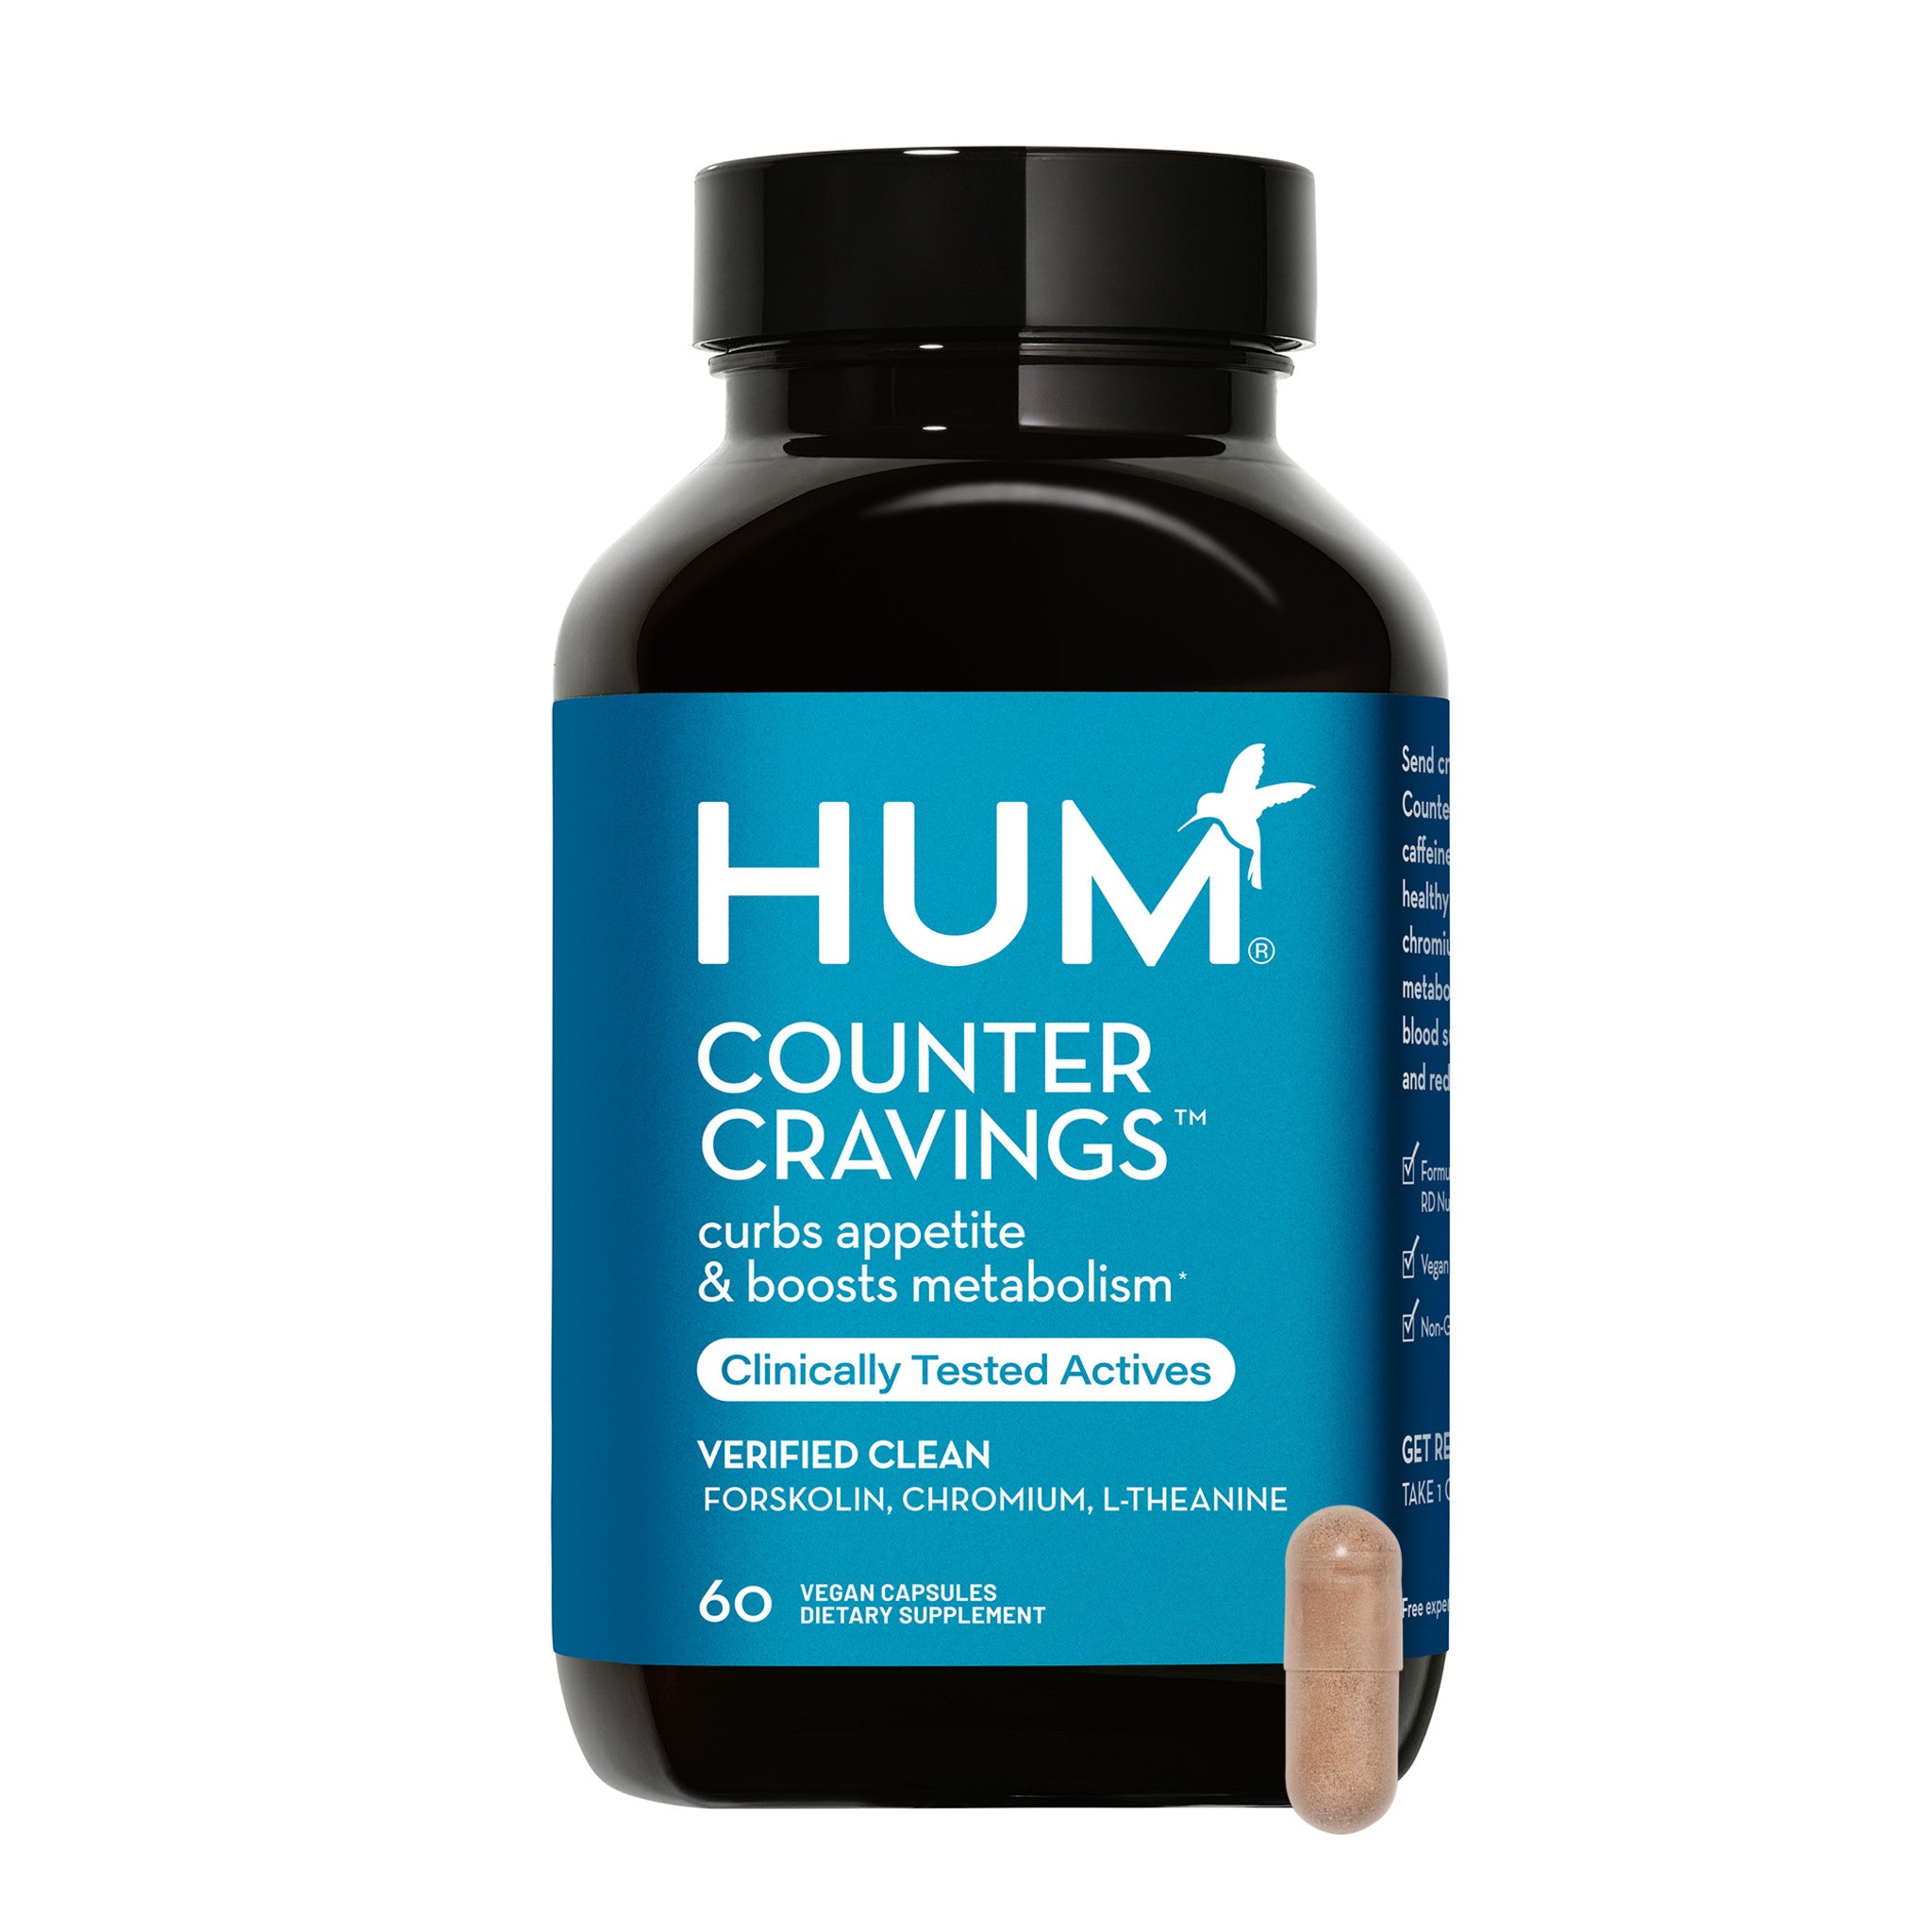 Hum Counter Cravings main image.